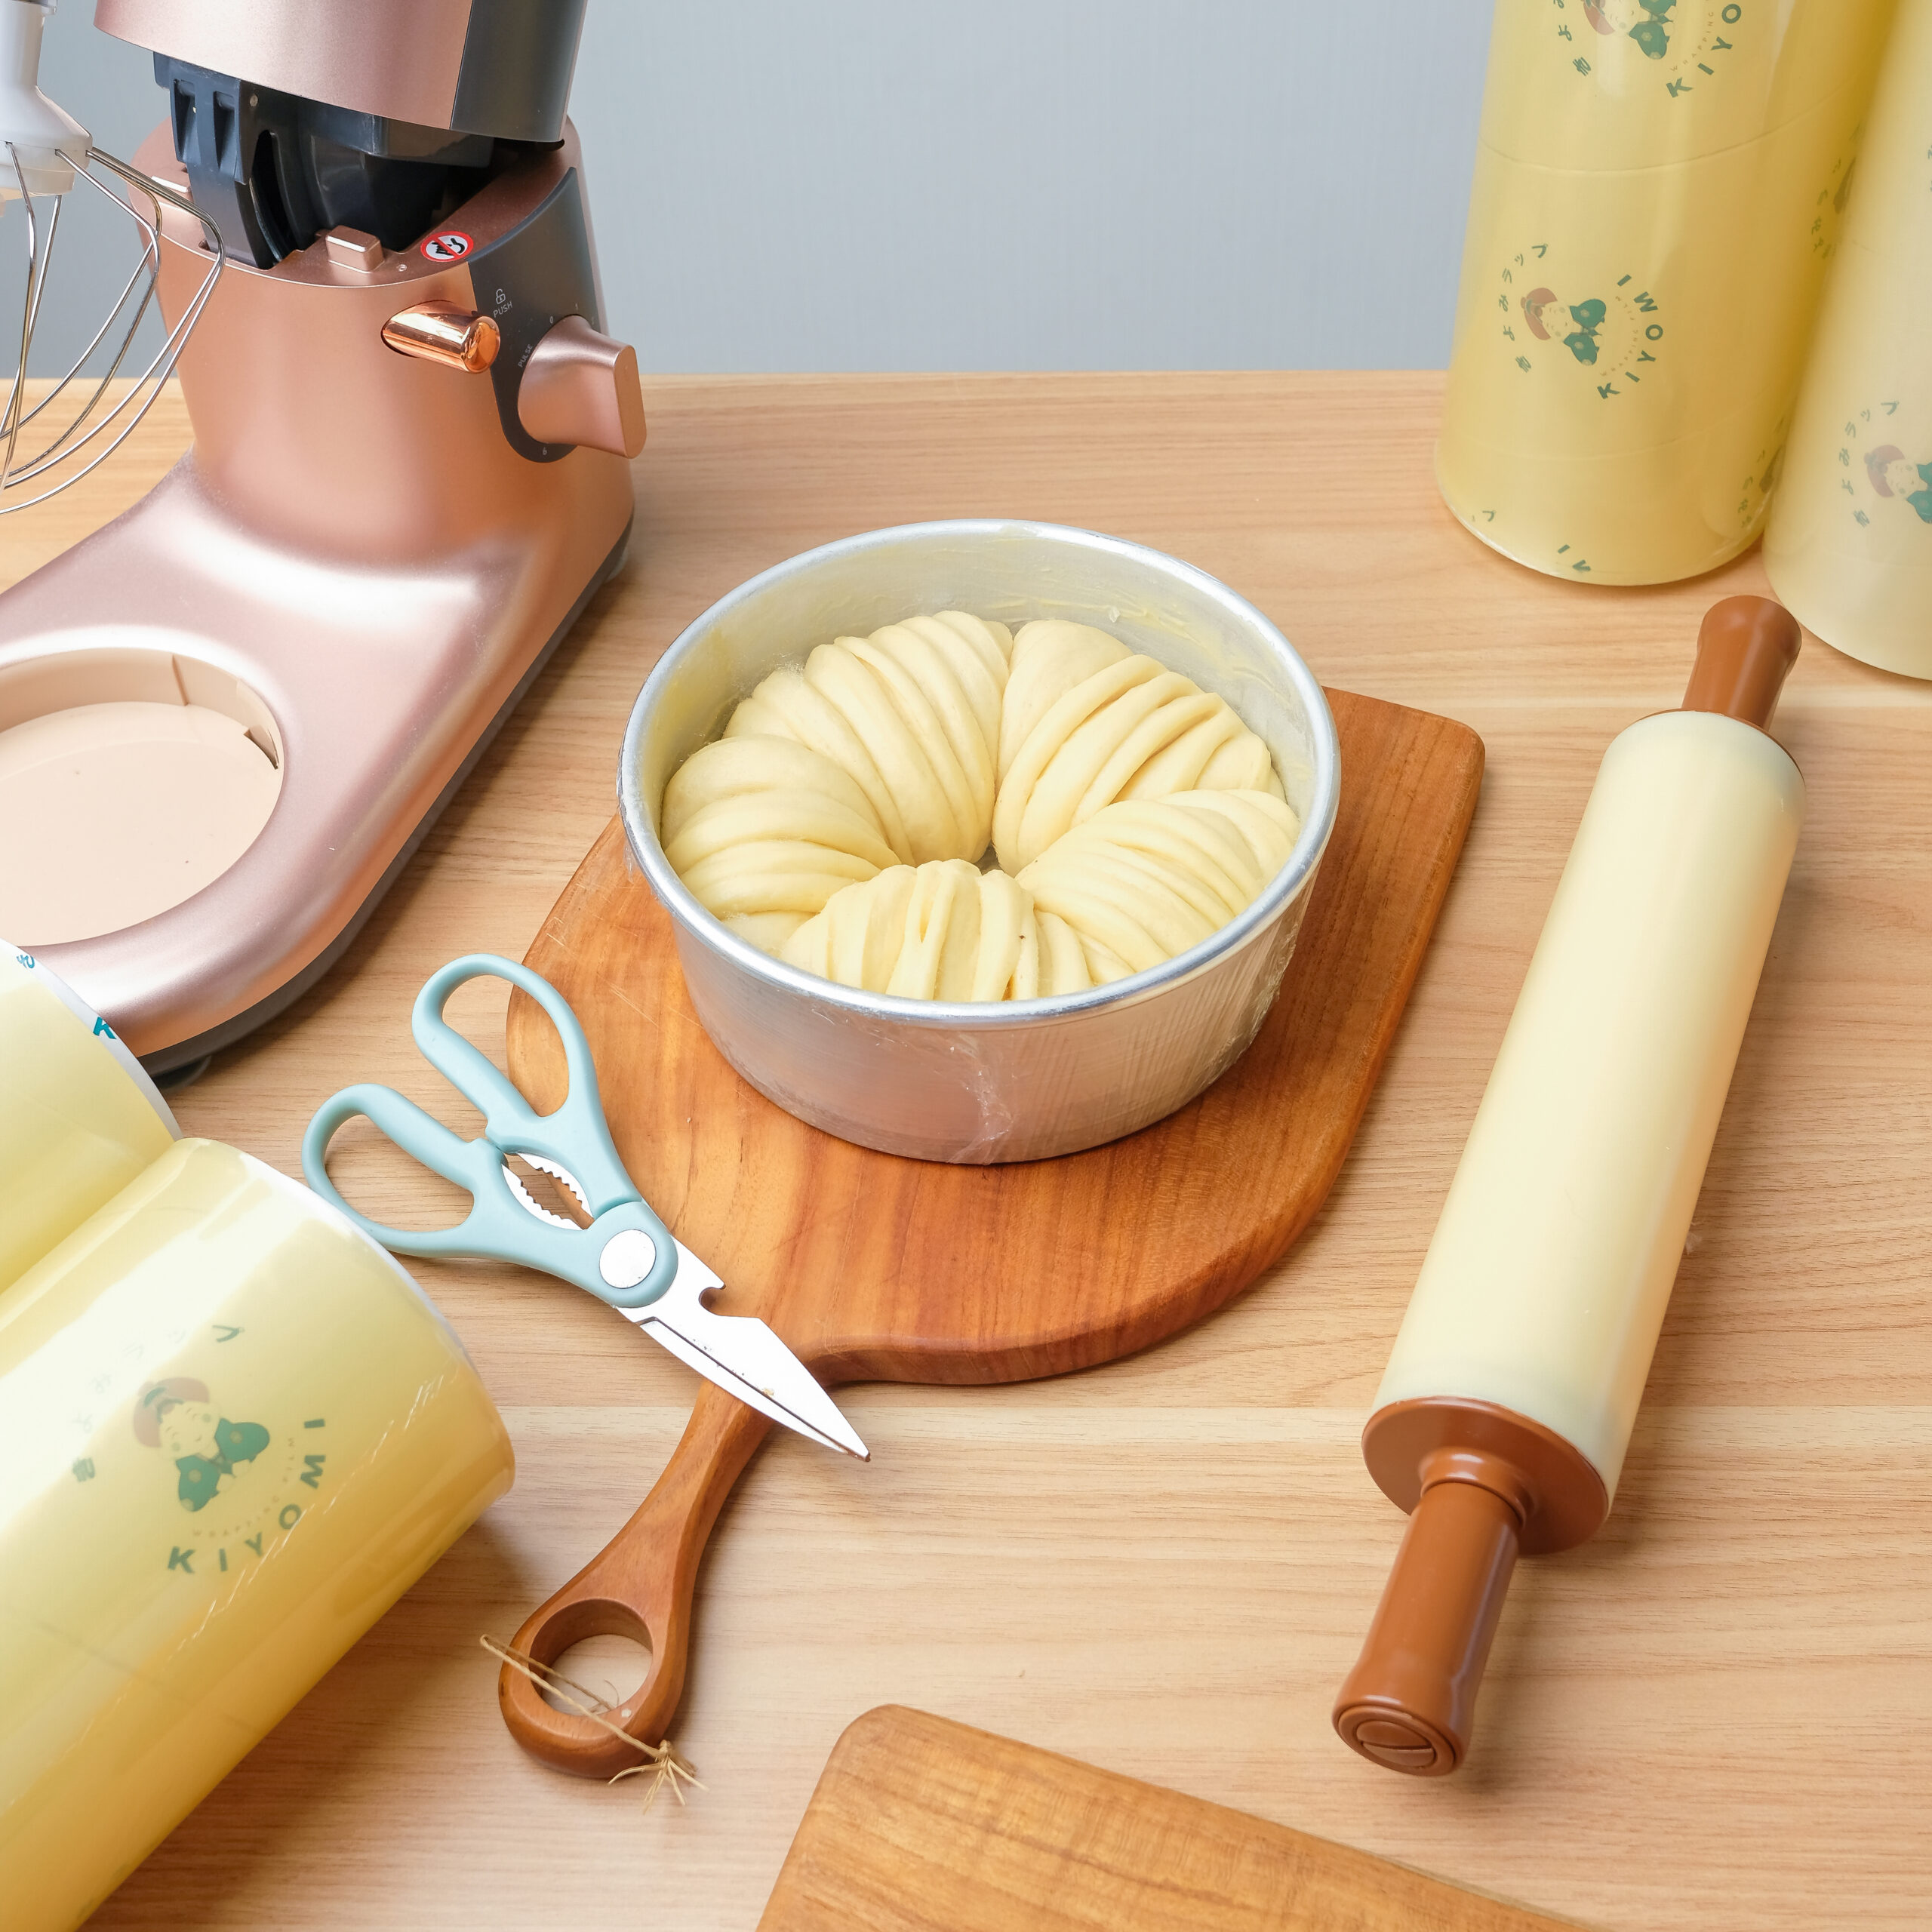 kiyomi aman dan bagus untuk dipakai baking dan bakery plastik wrapping yang aman dipakai untuk buah lebih darai best fresh raypin dan total